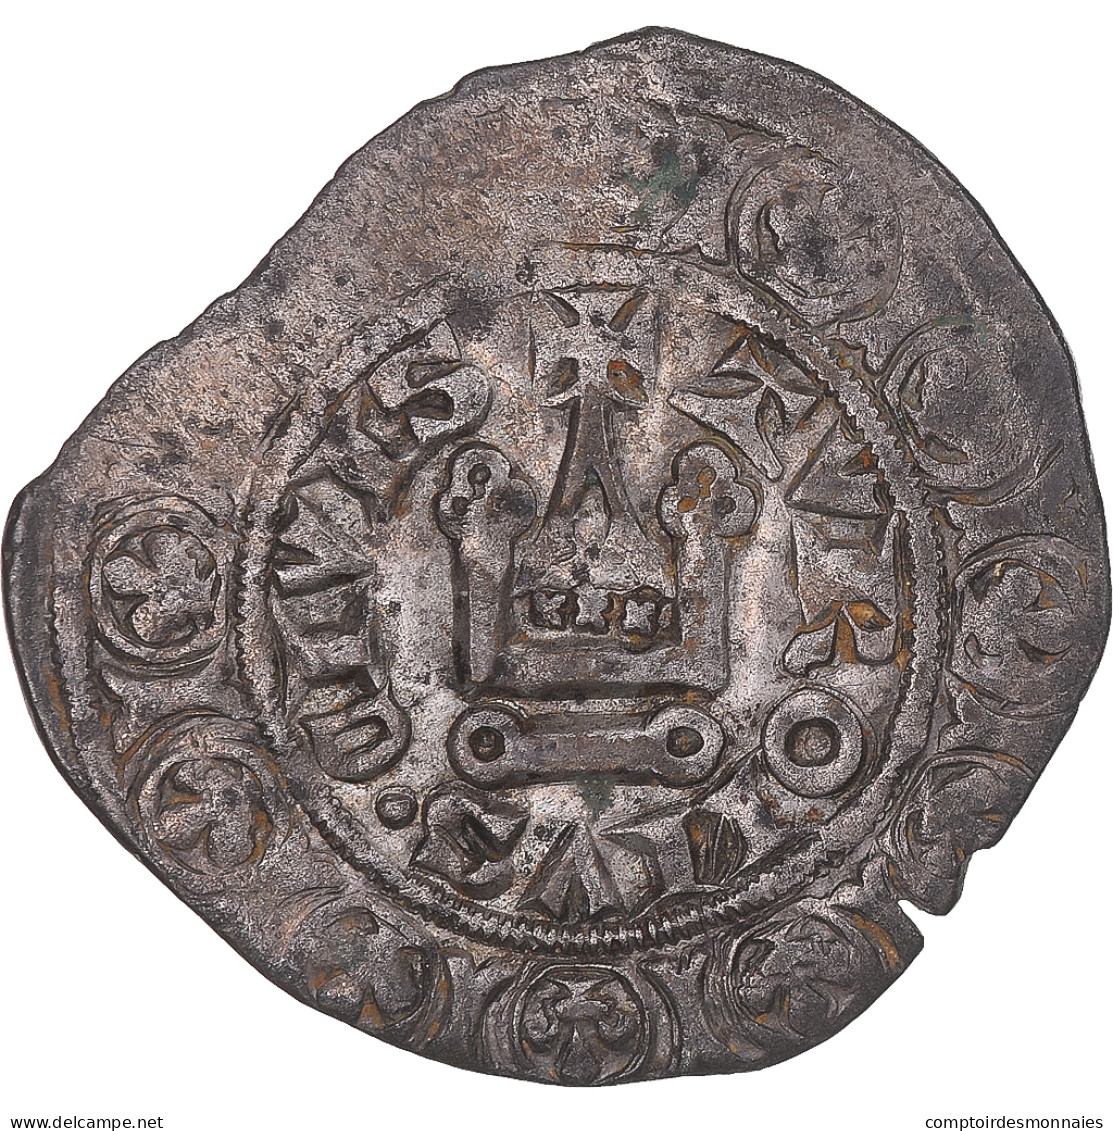 Monnaie, France, Jean II Le Bon, Gros Tournois, 1350-1364, TTB, Argent - 1350-1364 John II The Good